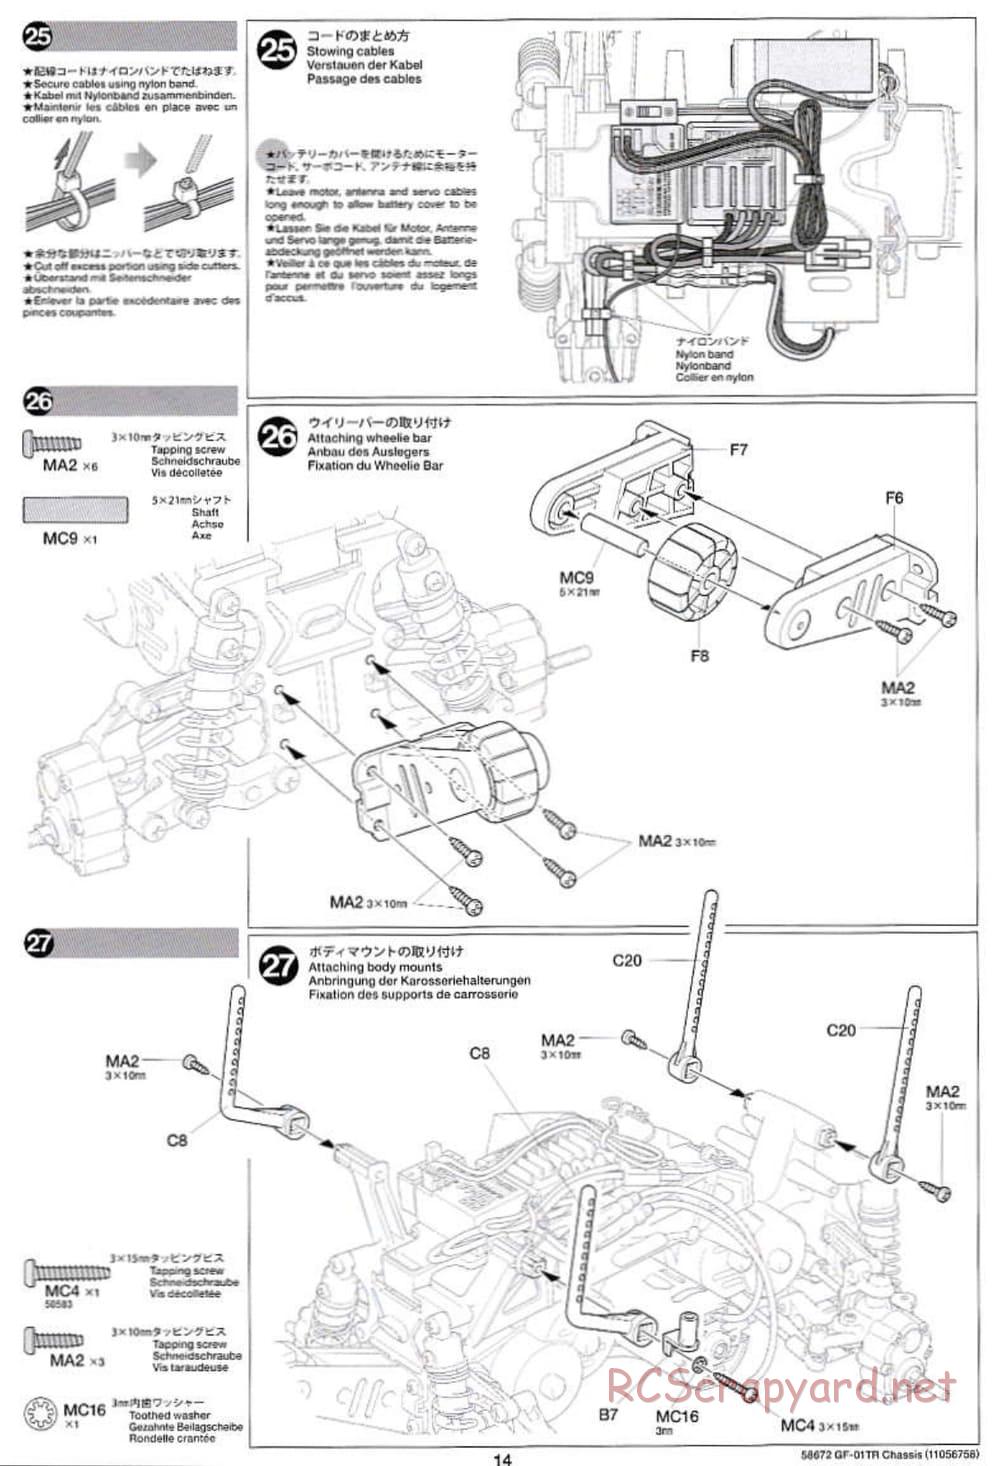 Tamiya - Monster Beetle Trail - GF-01TR Chassis - Manual - Page 14